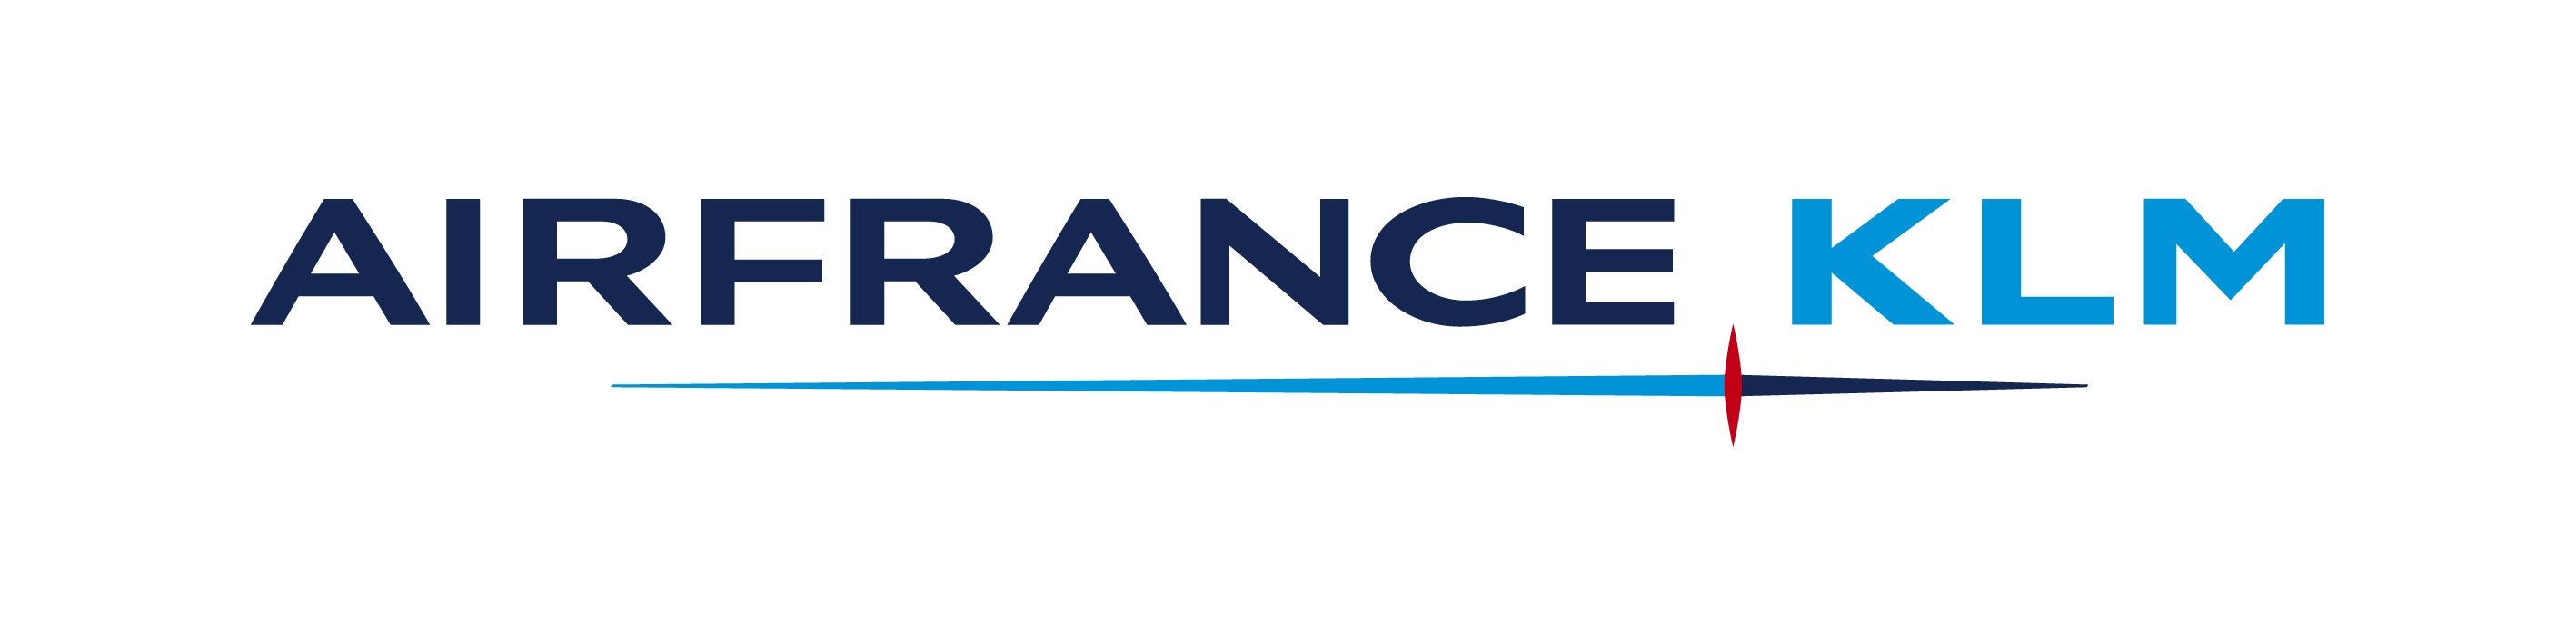 NEWS Air France keeping more 